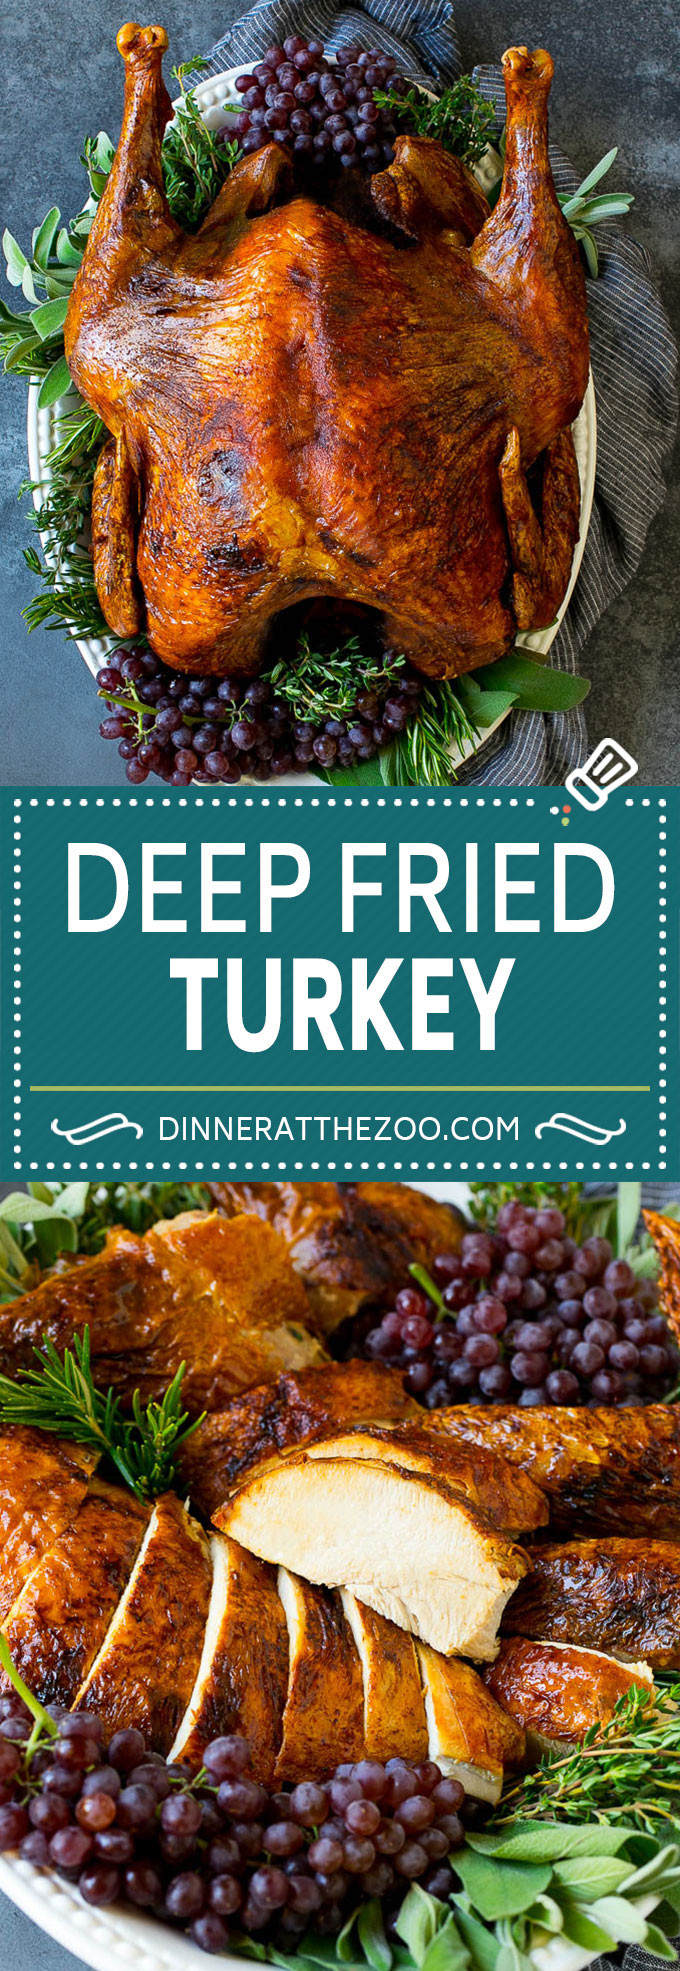 Deep Fried Turkey Thanksgiving
 Deep Fried Turkey Recipe